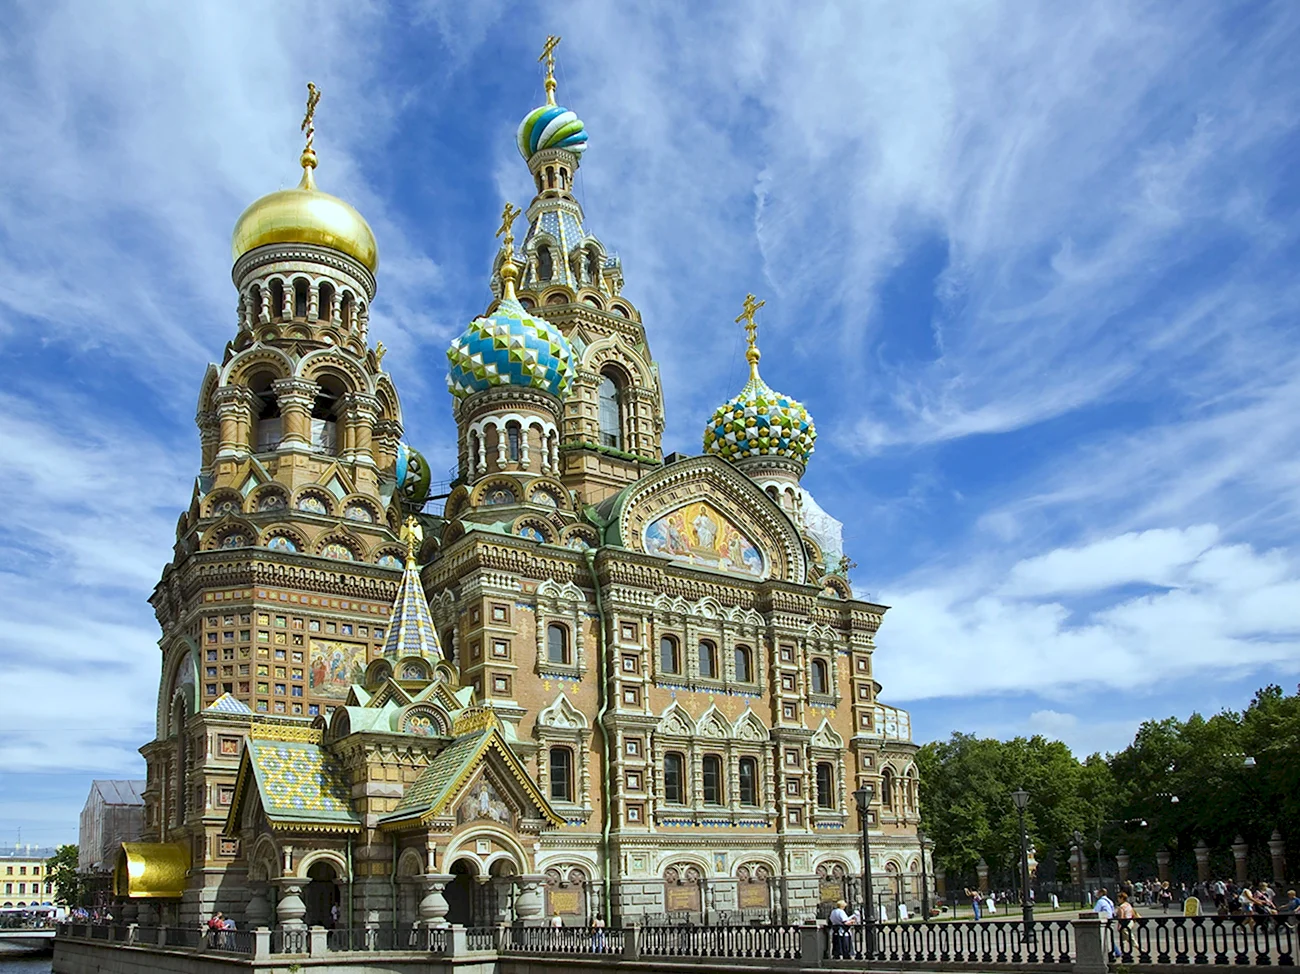 Храм Спаса-на-крови Санкт-Петербург. Красивая картинка